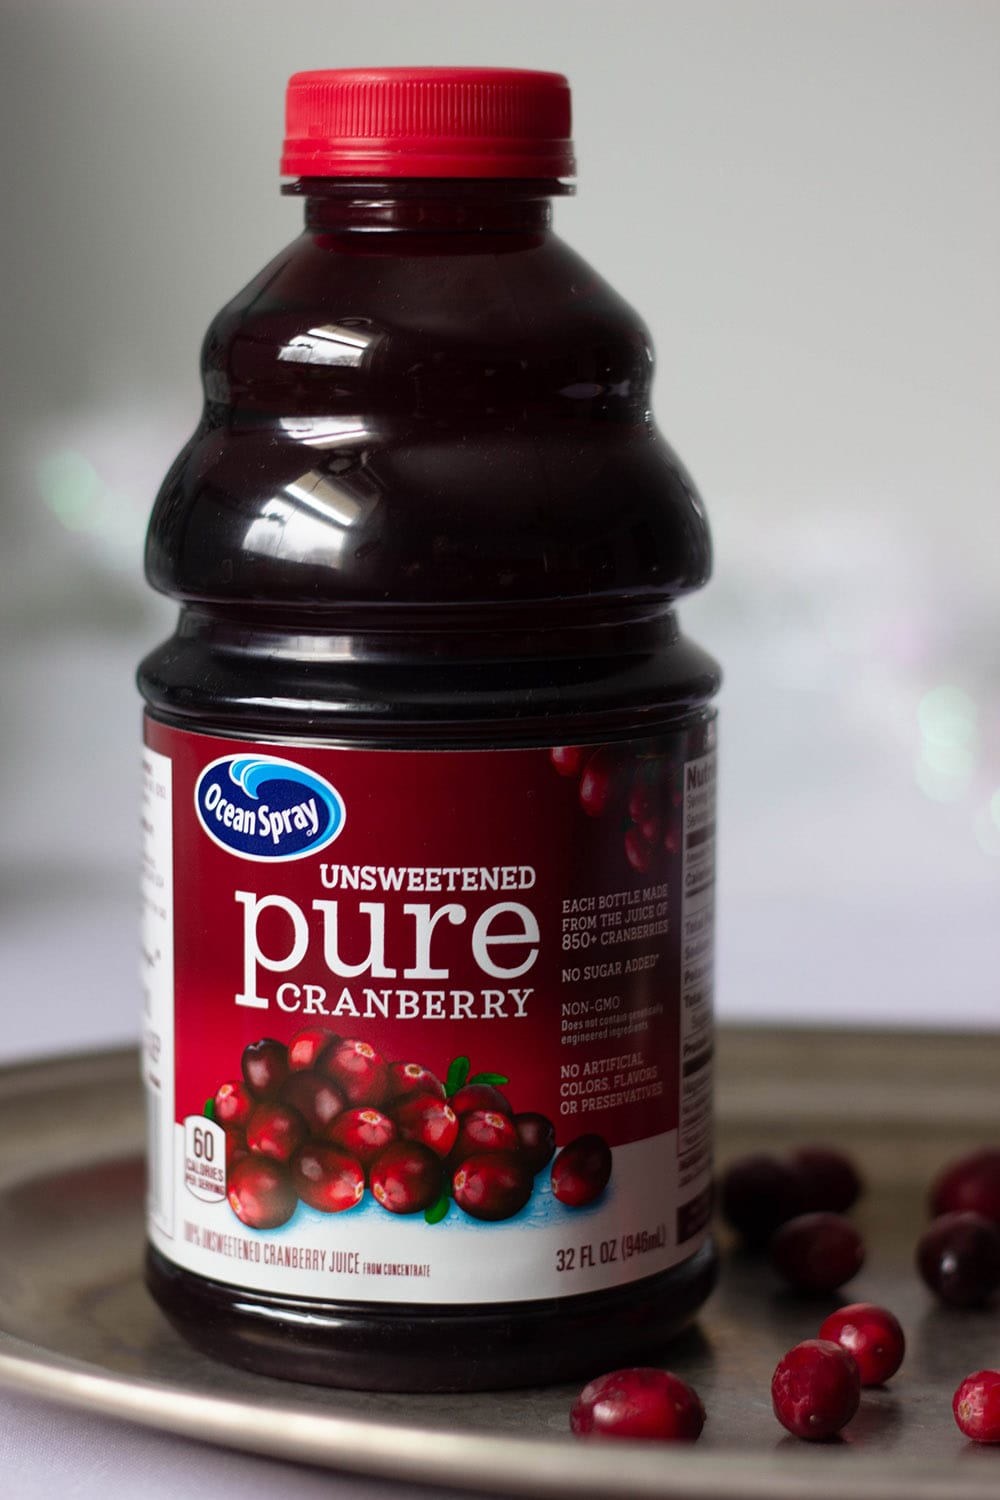 Unsweetened Cranberry Juice. 